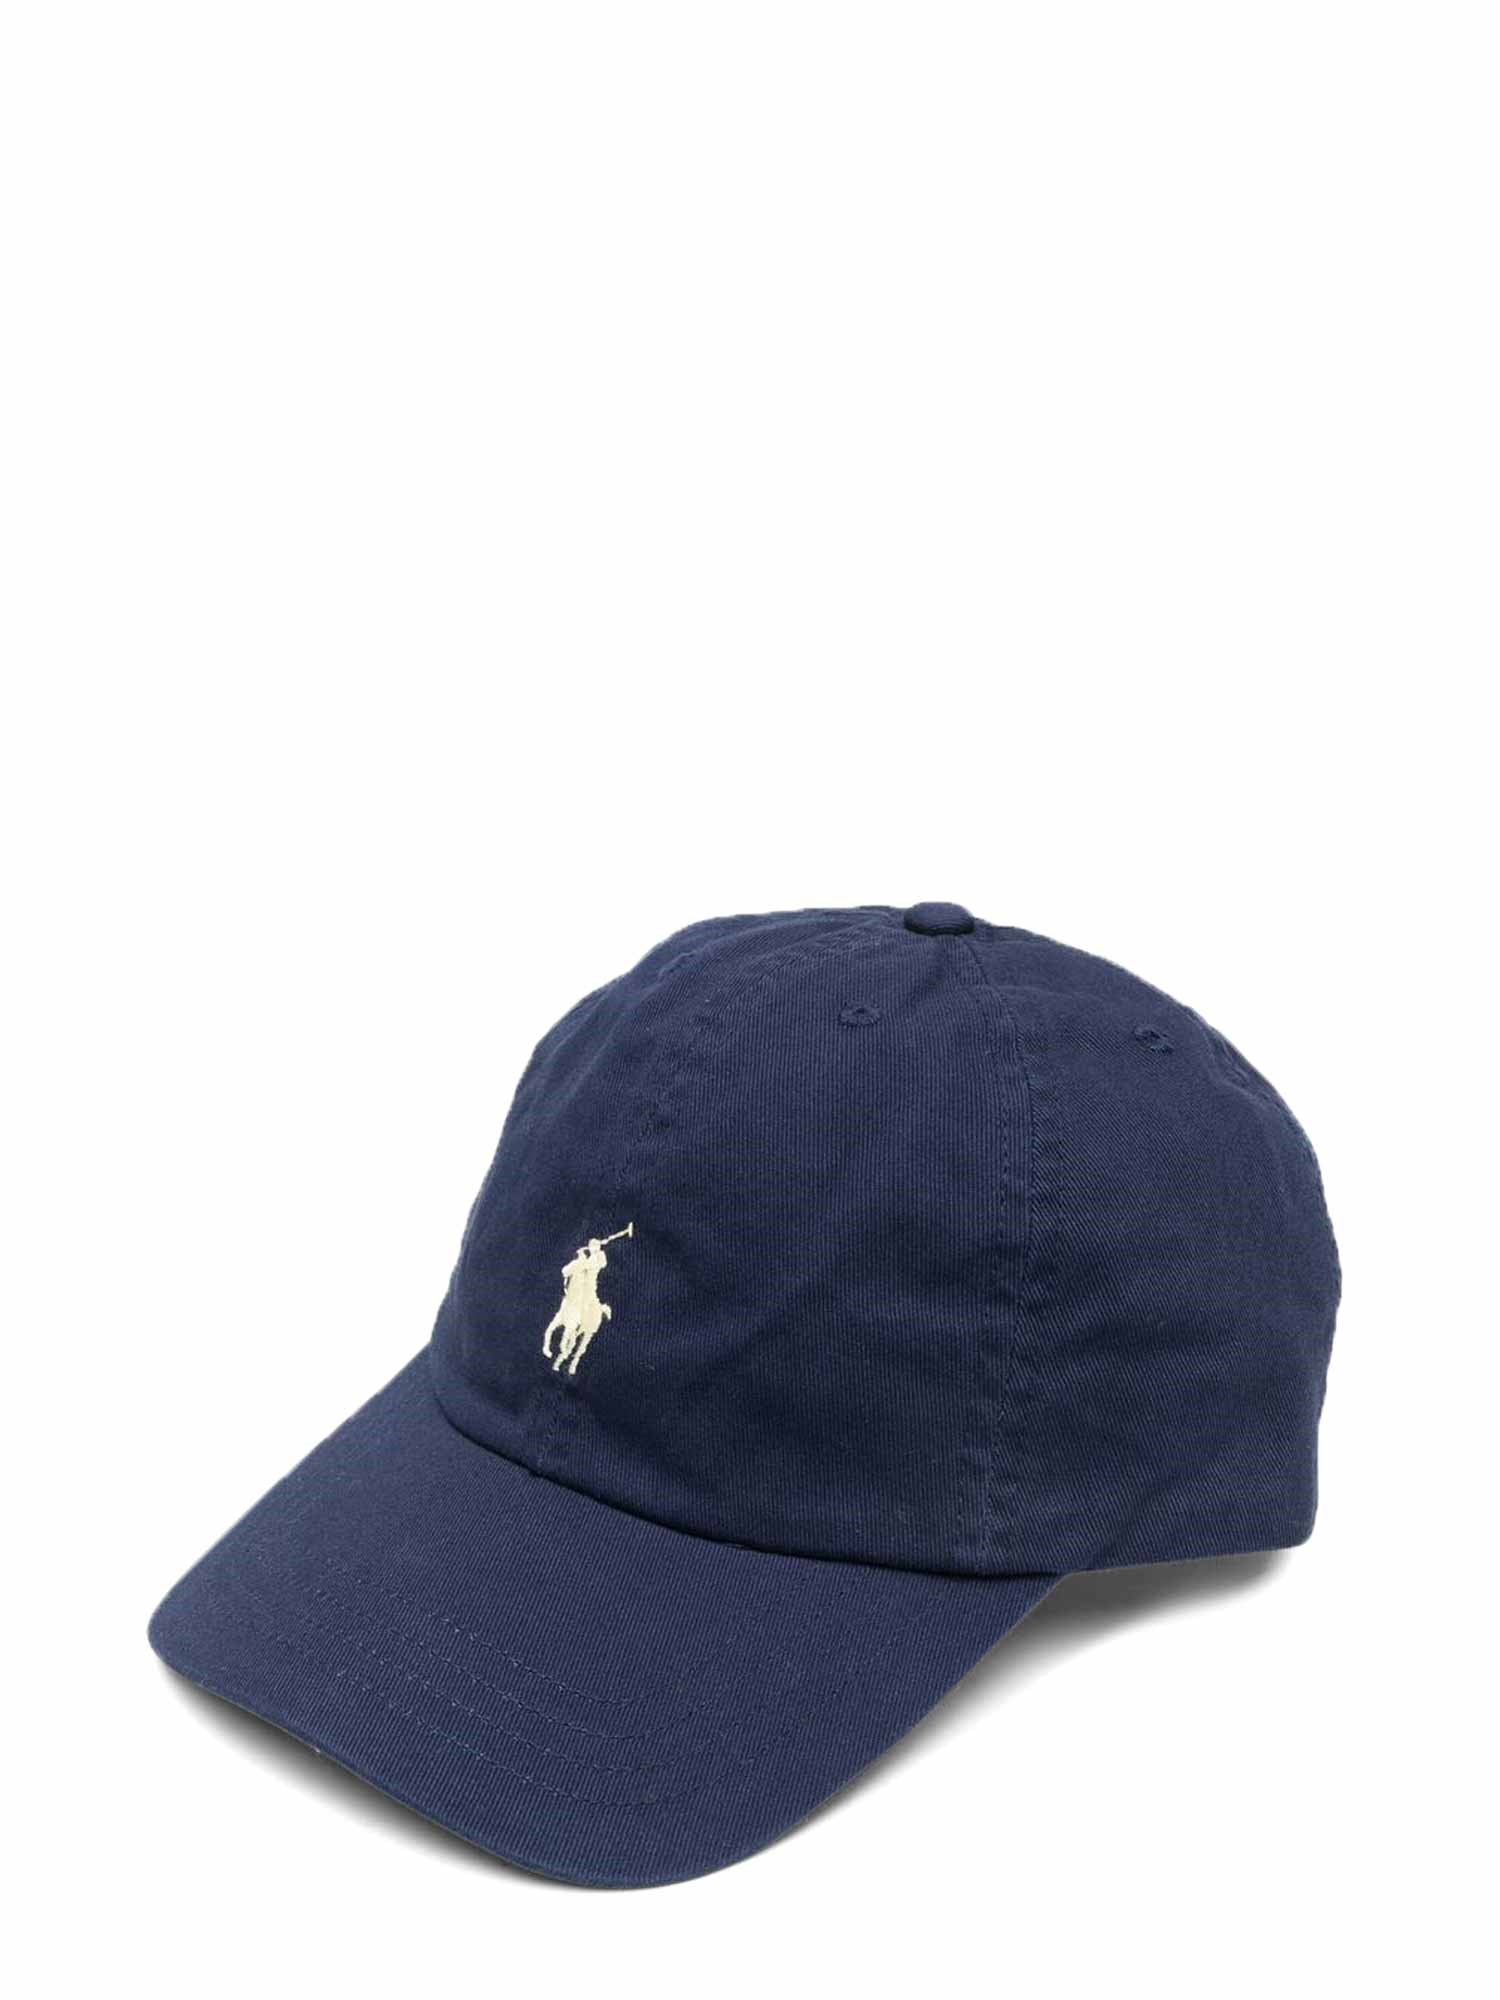 Polo Ralph Lauren polo ralph lauren clsc cap-apparel accessories-hat